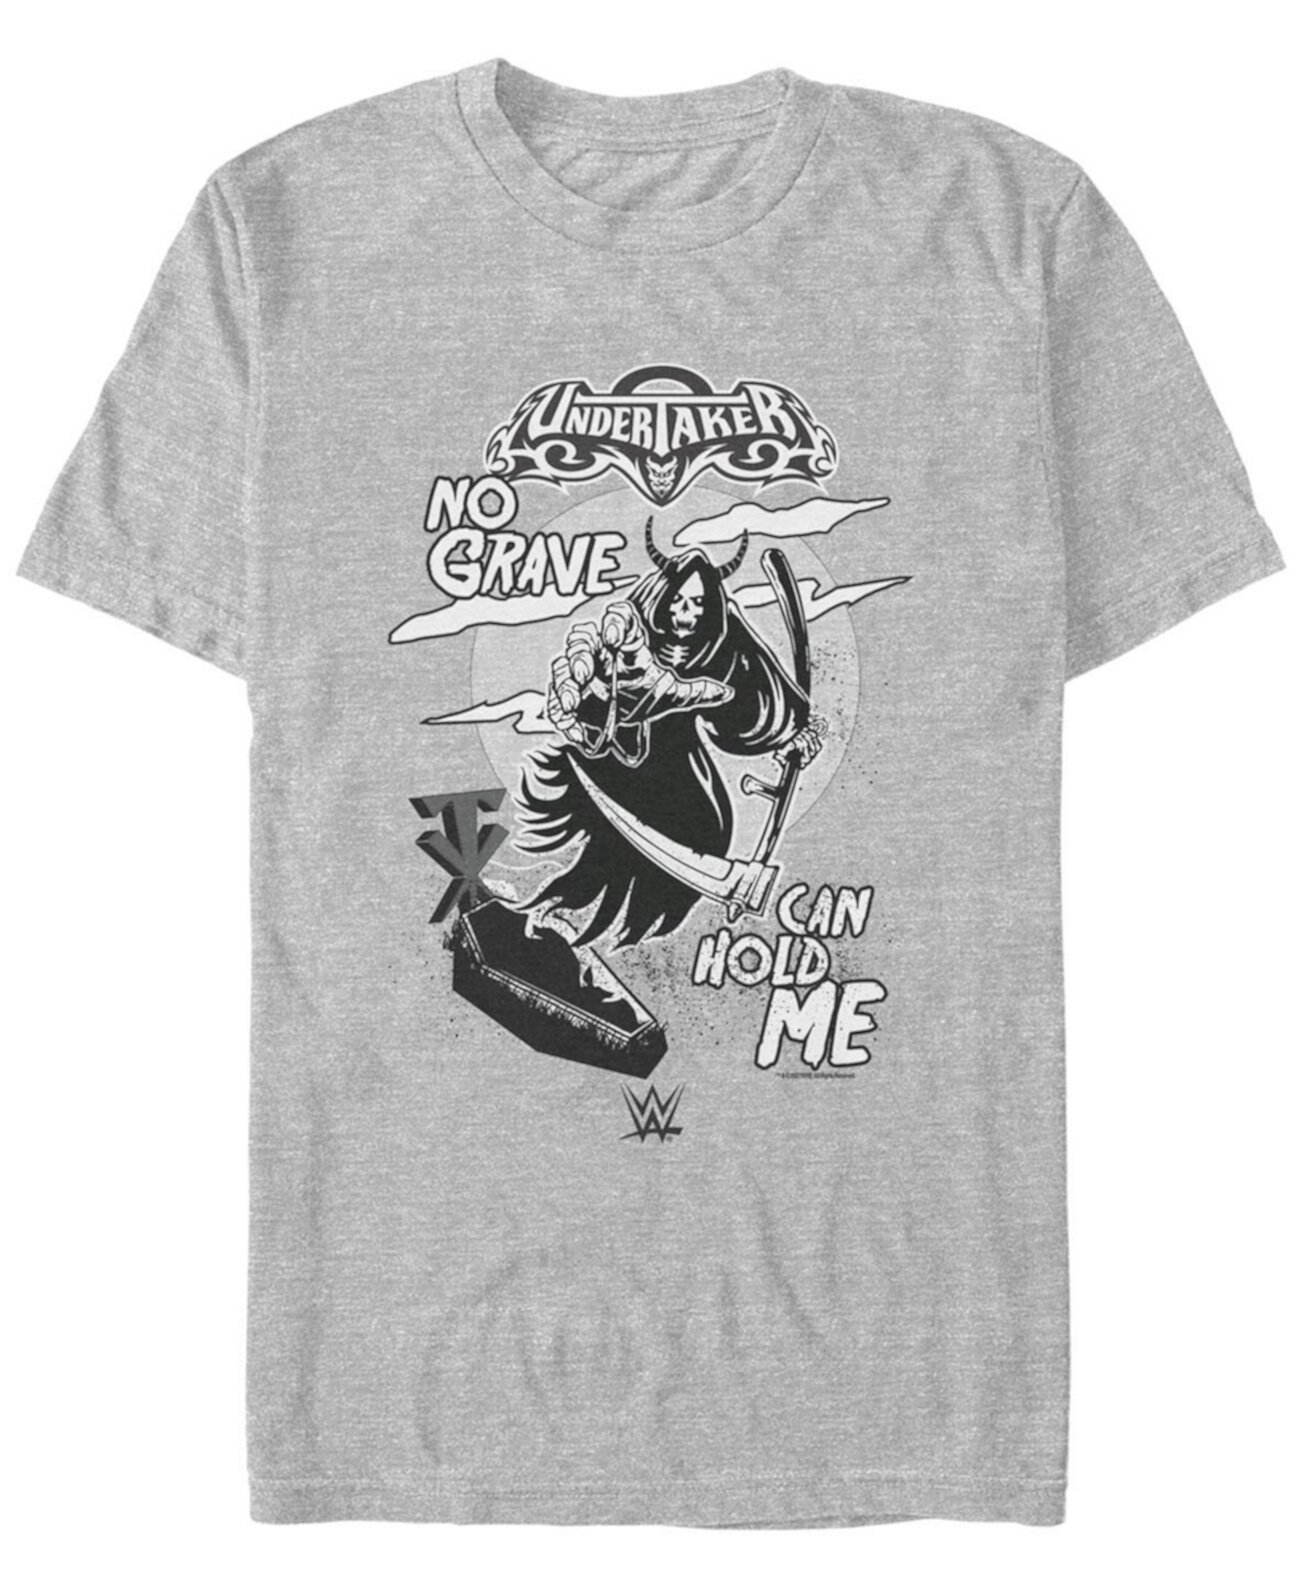 Мужская футболка с коротким рукавом WWE Undertaker No Grave FIFTH SUN